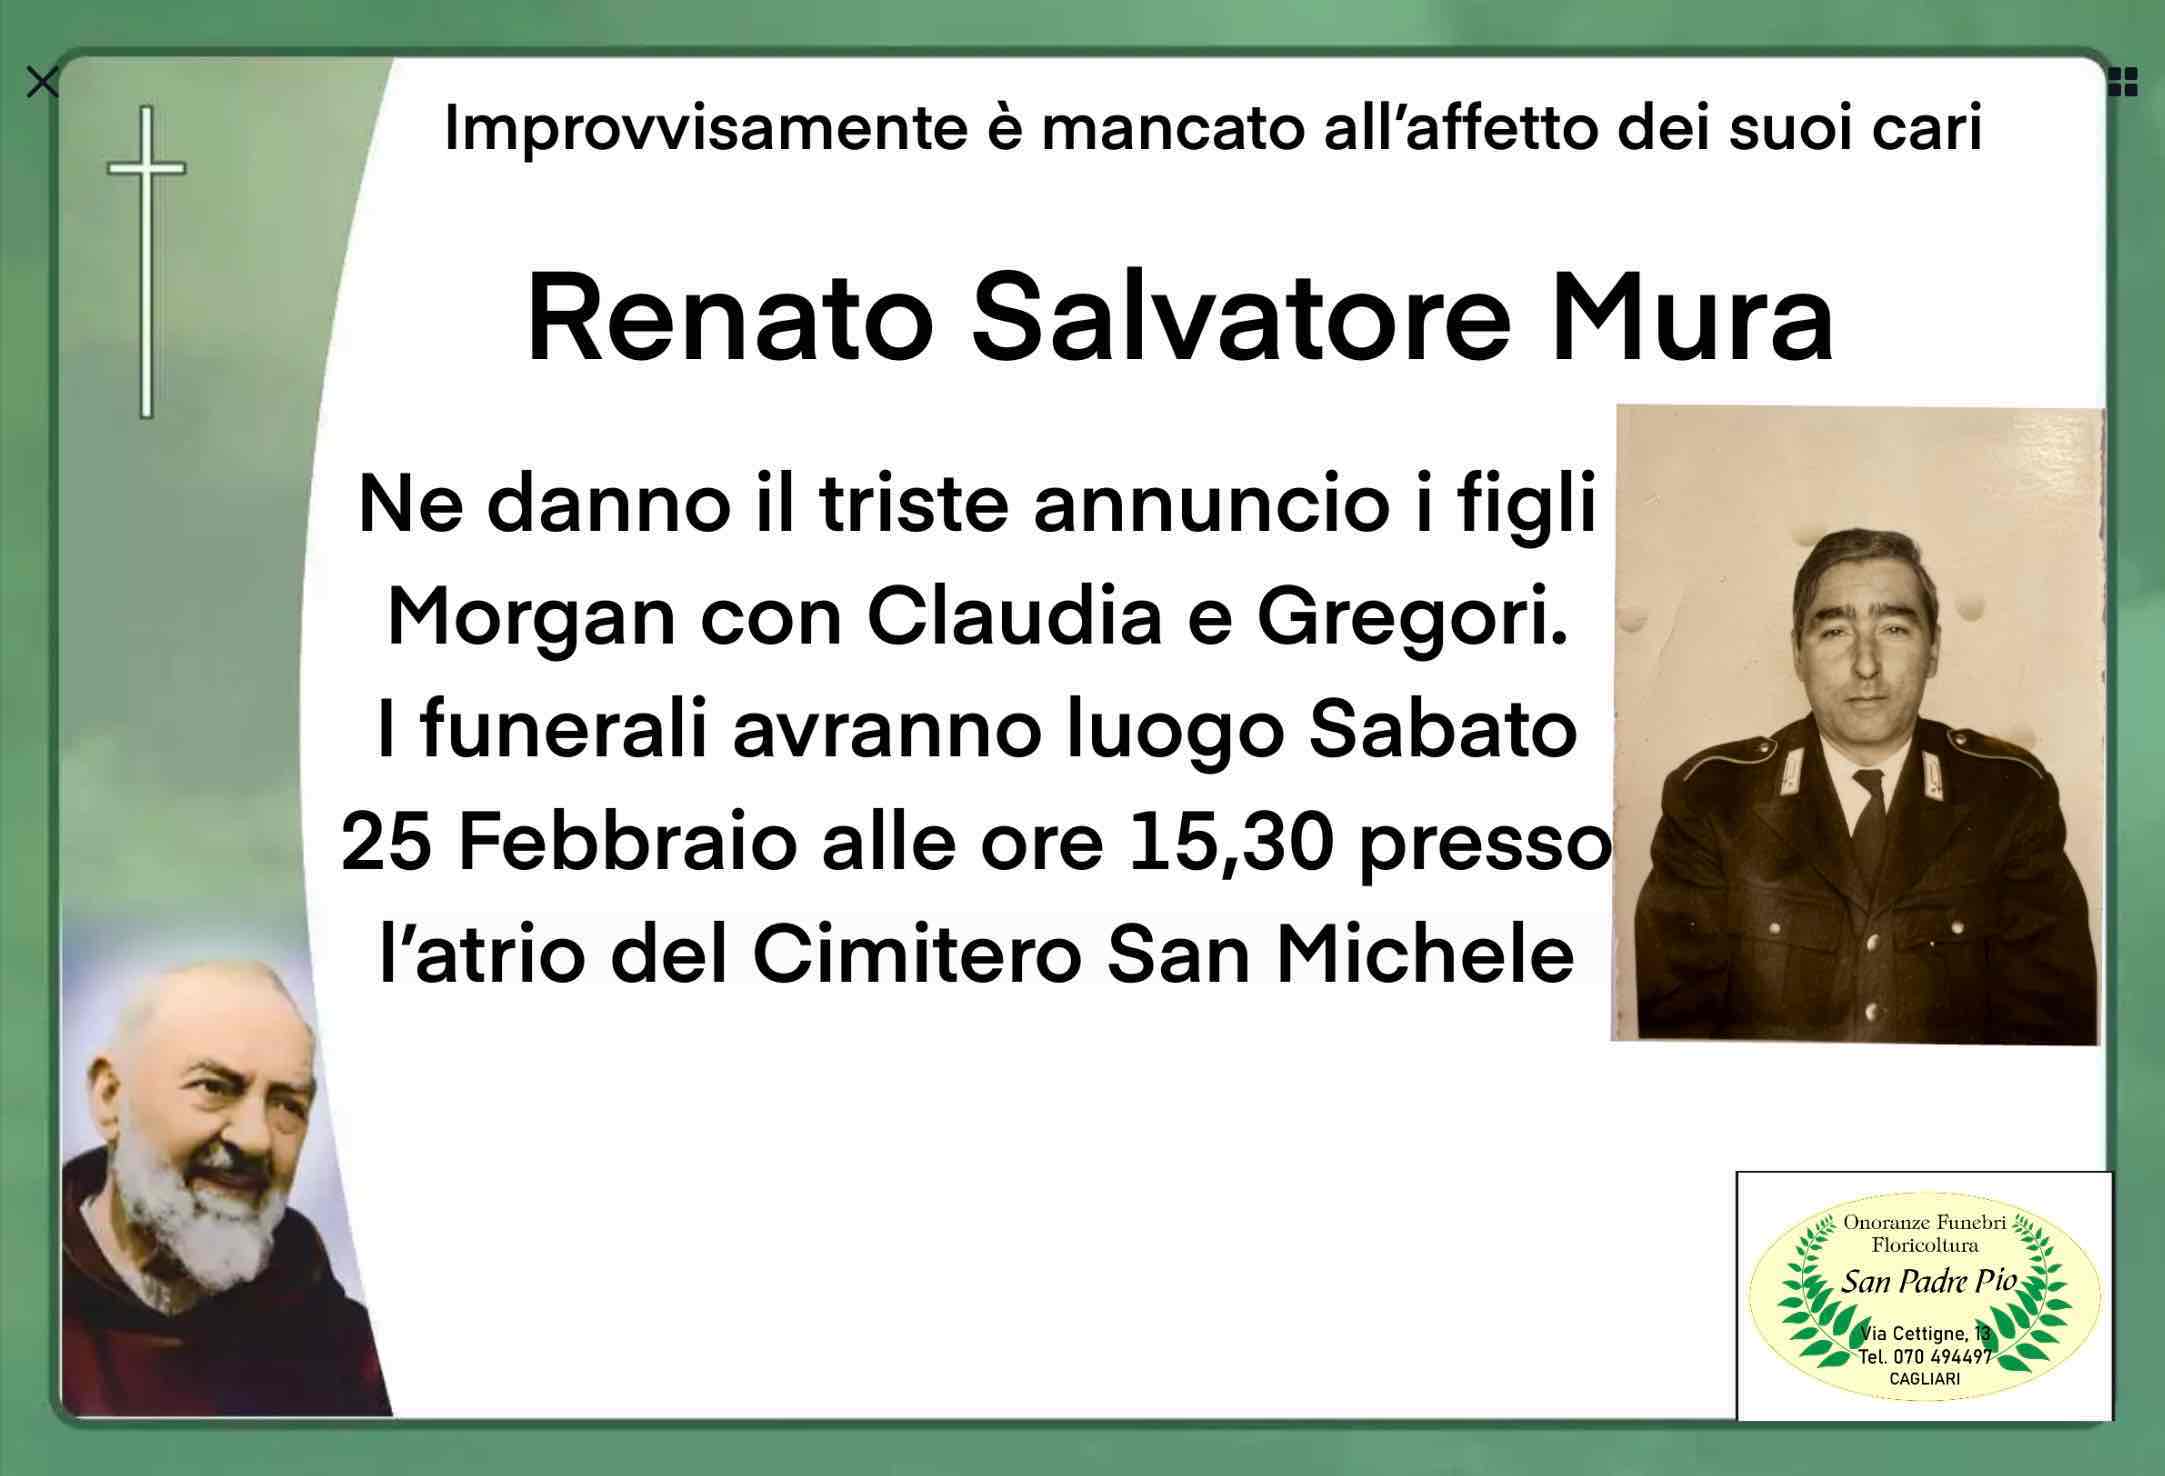 Renato Salvatore Mura